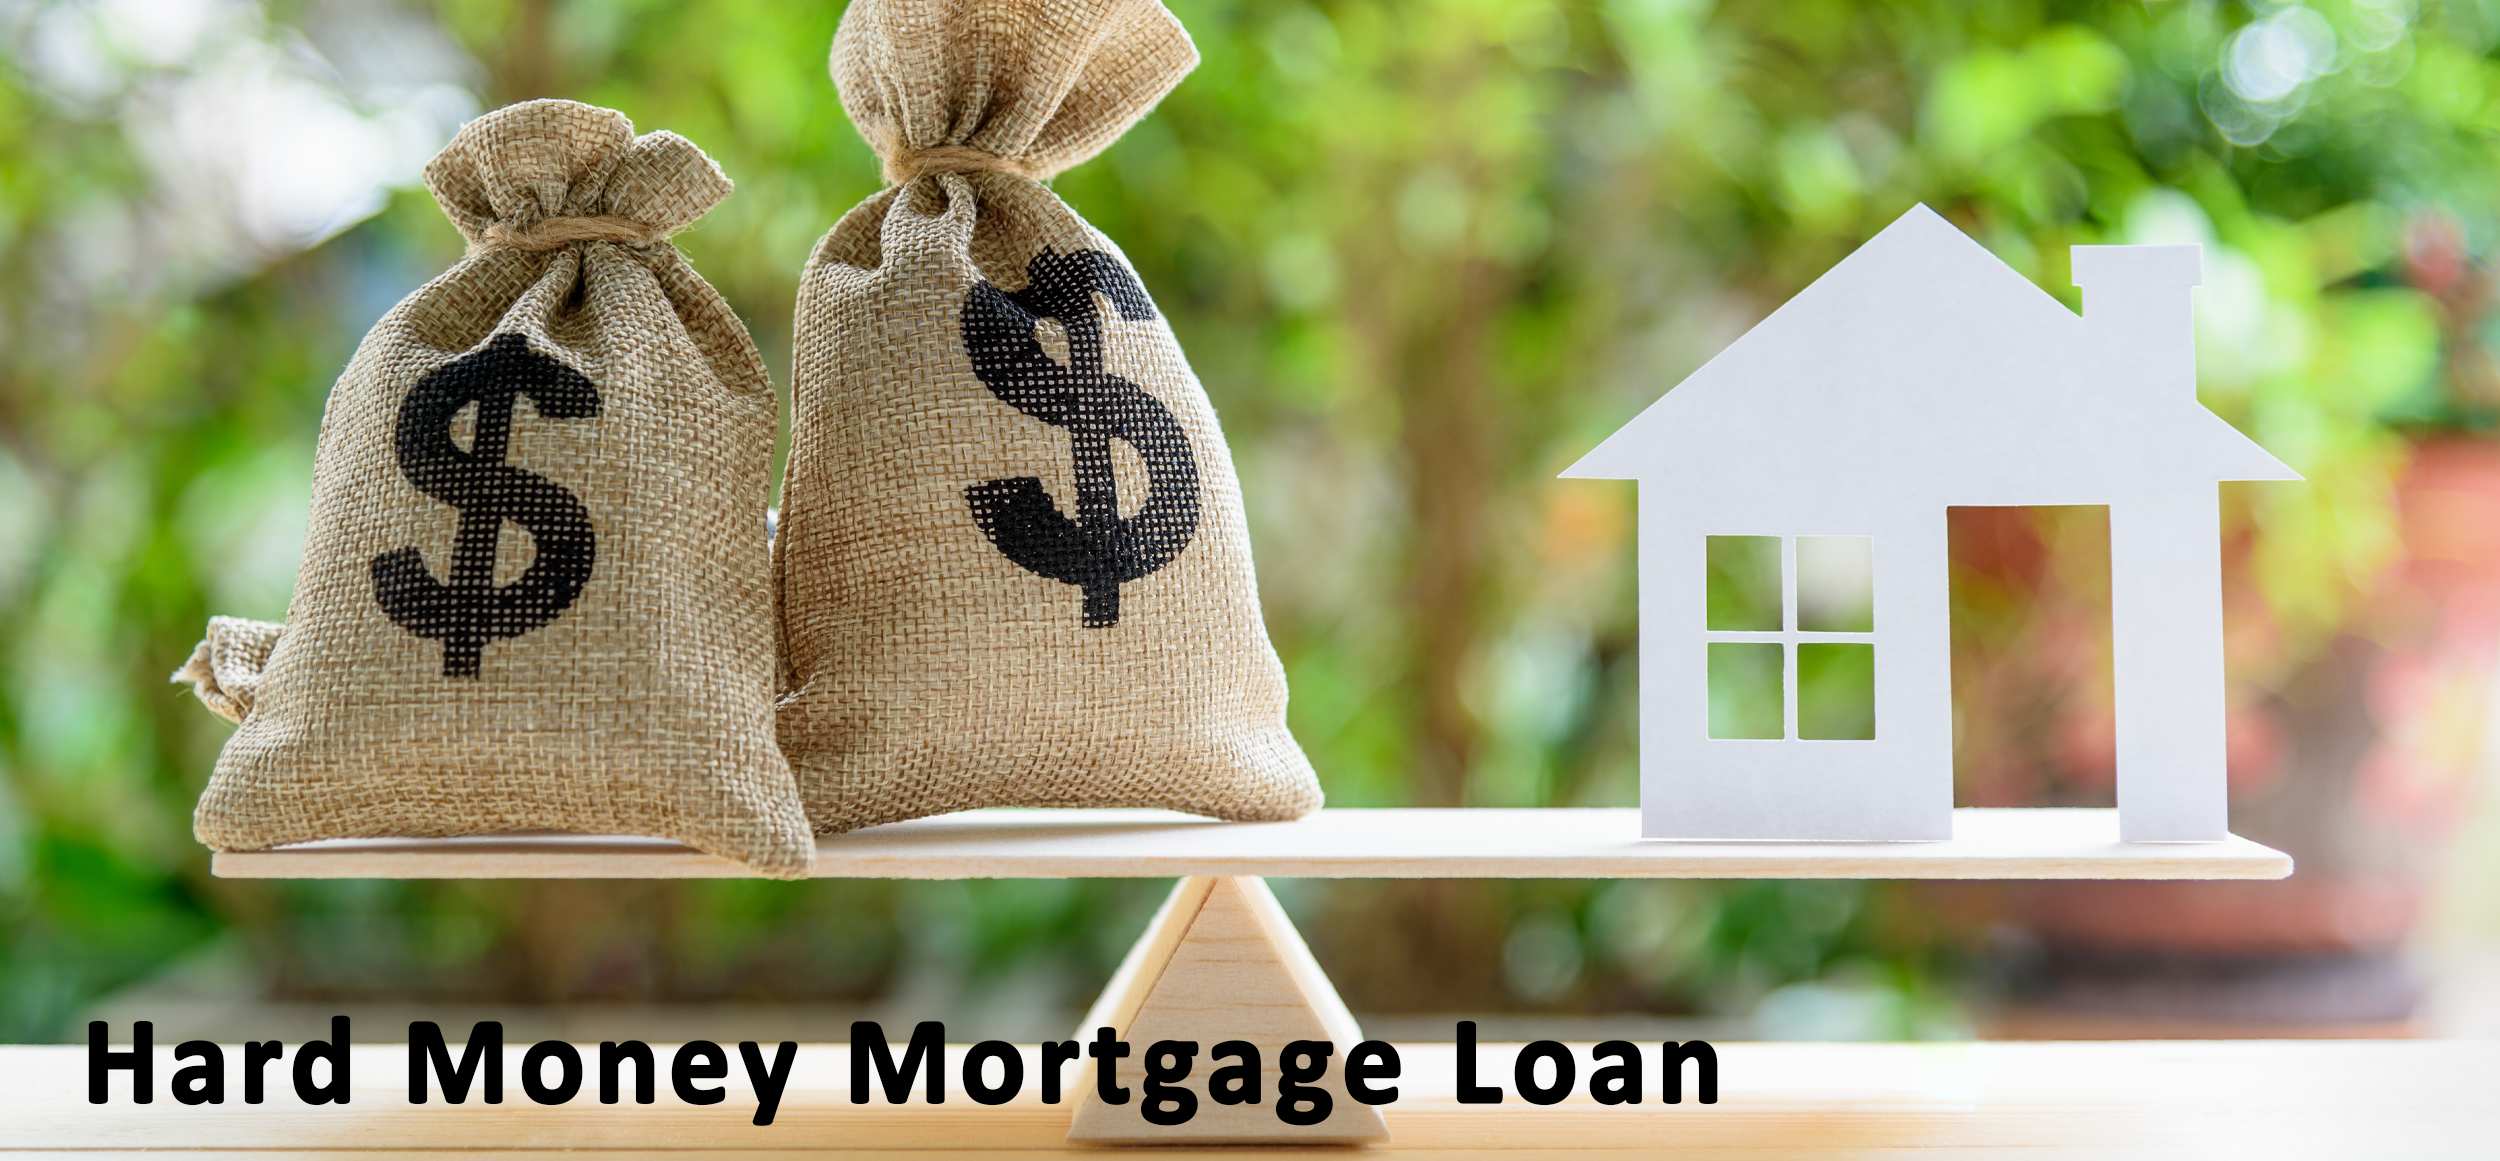 Hard Money Mortgage Loan